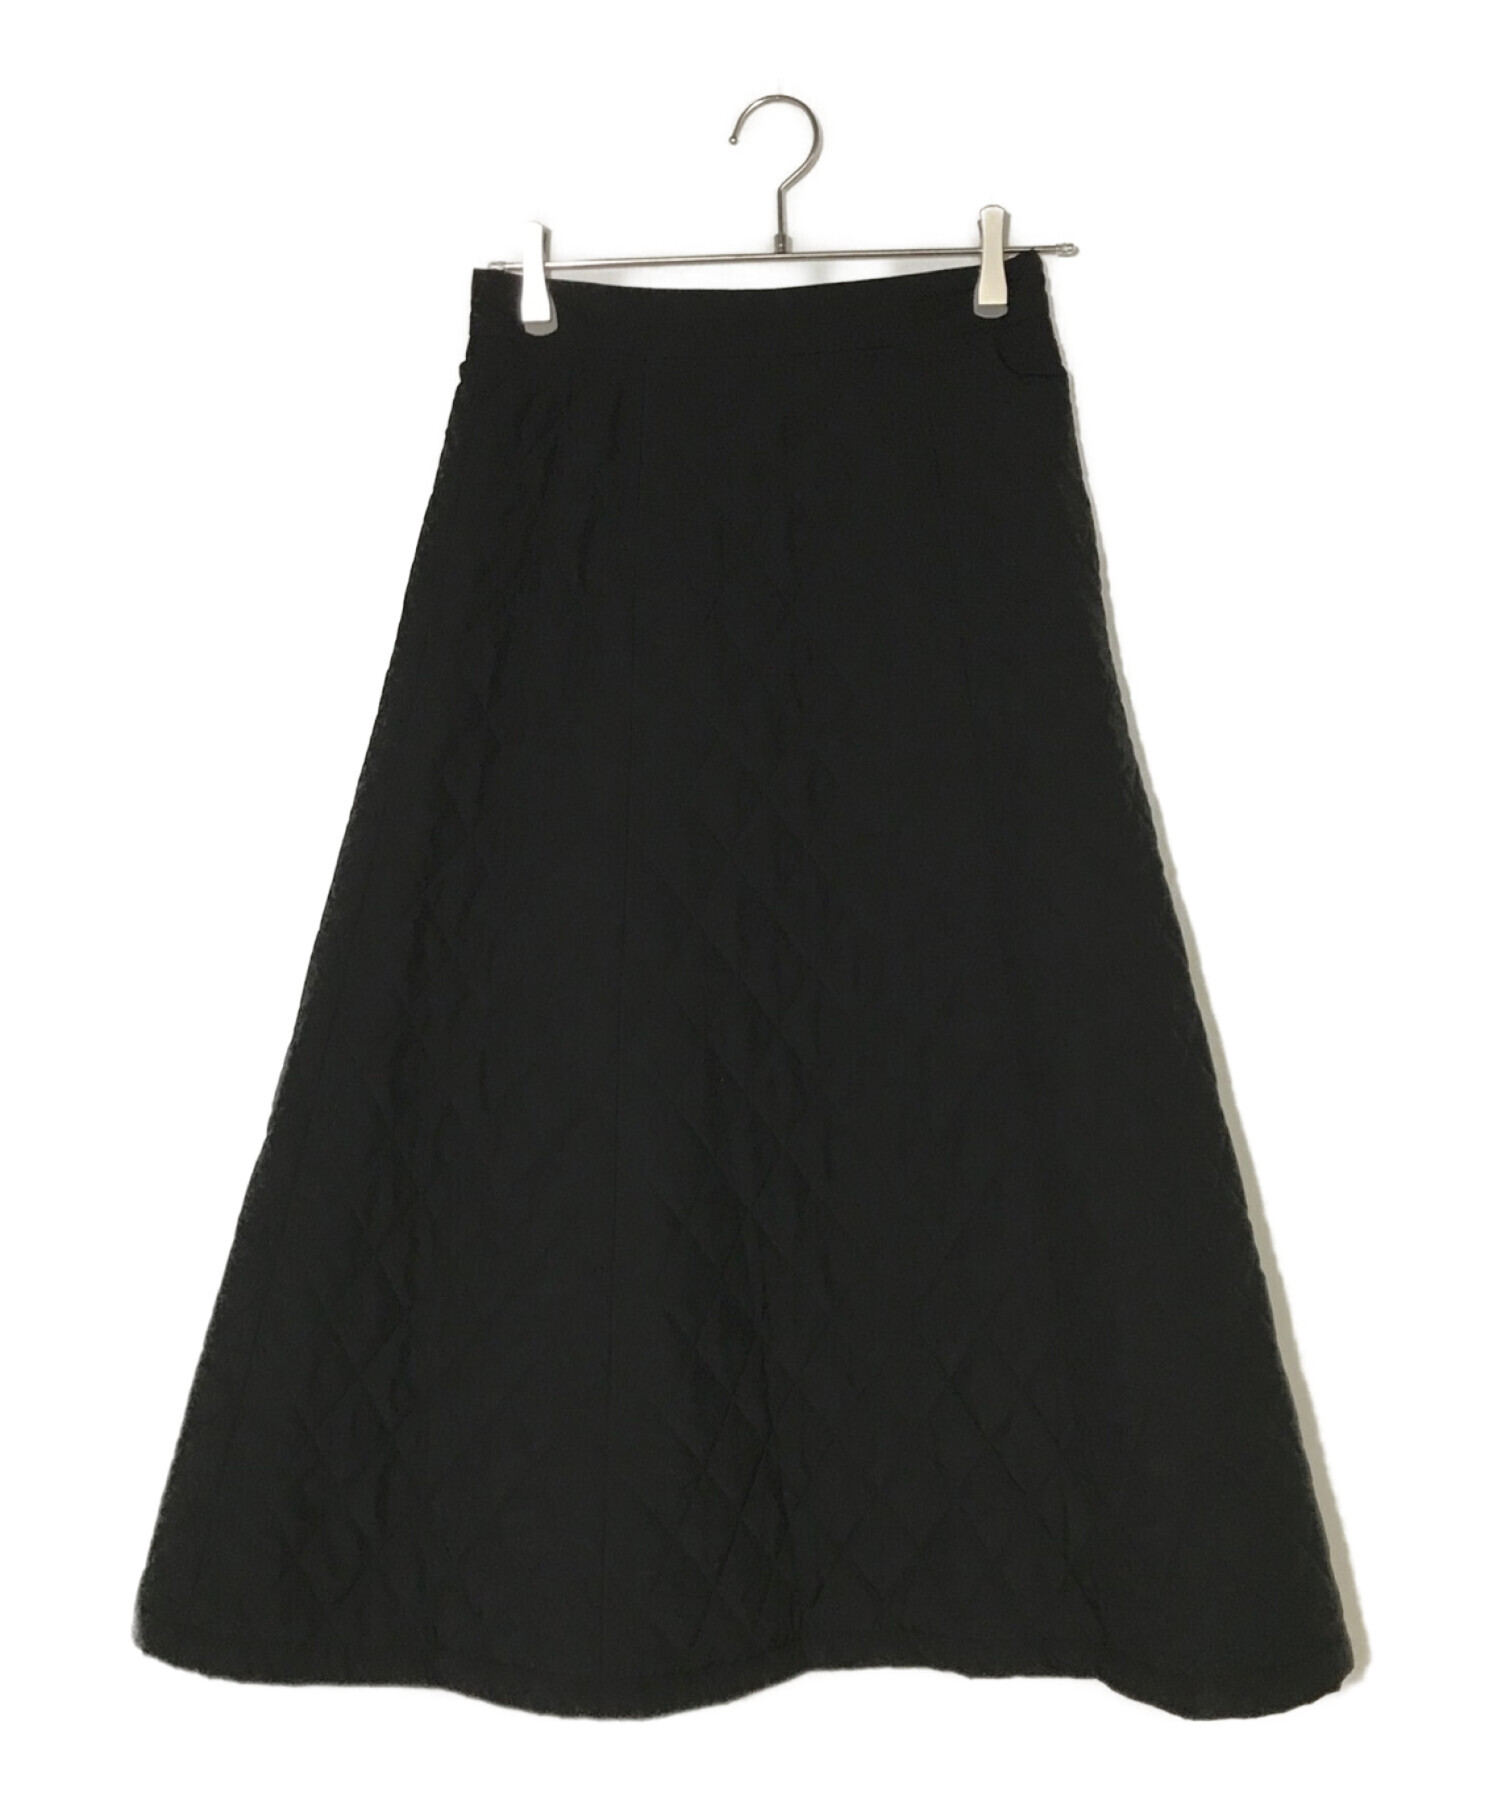 UNITED ARROWS (ユナイテッドアローズ) キルティングフレアスカート ブラック サイズ:38